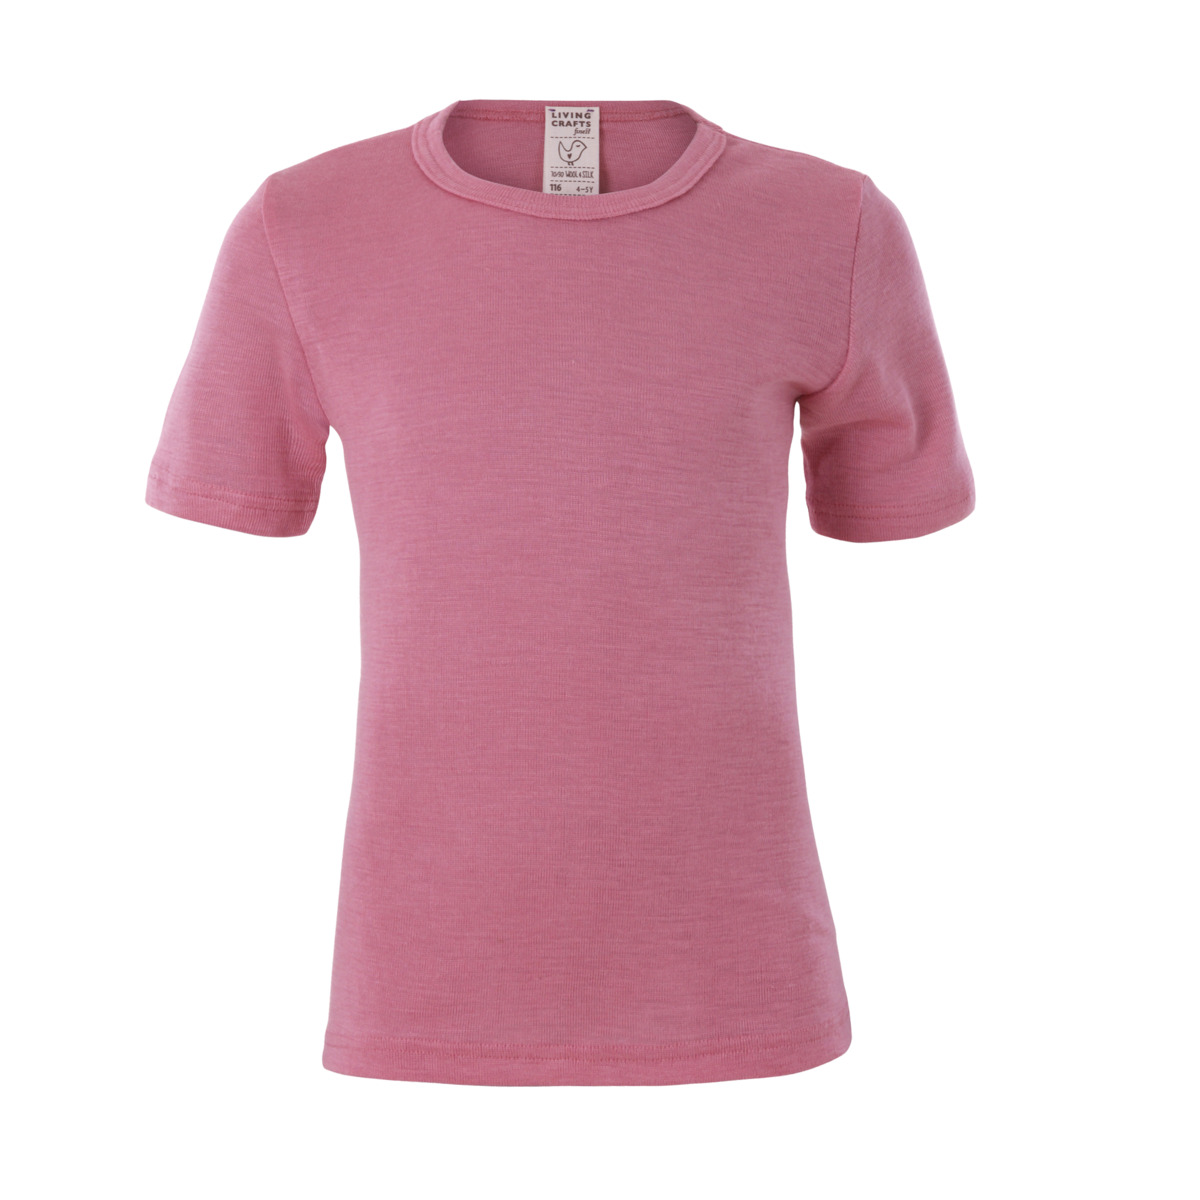 Pink Short-sleeved shirt, 